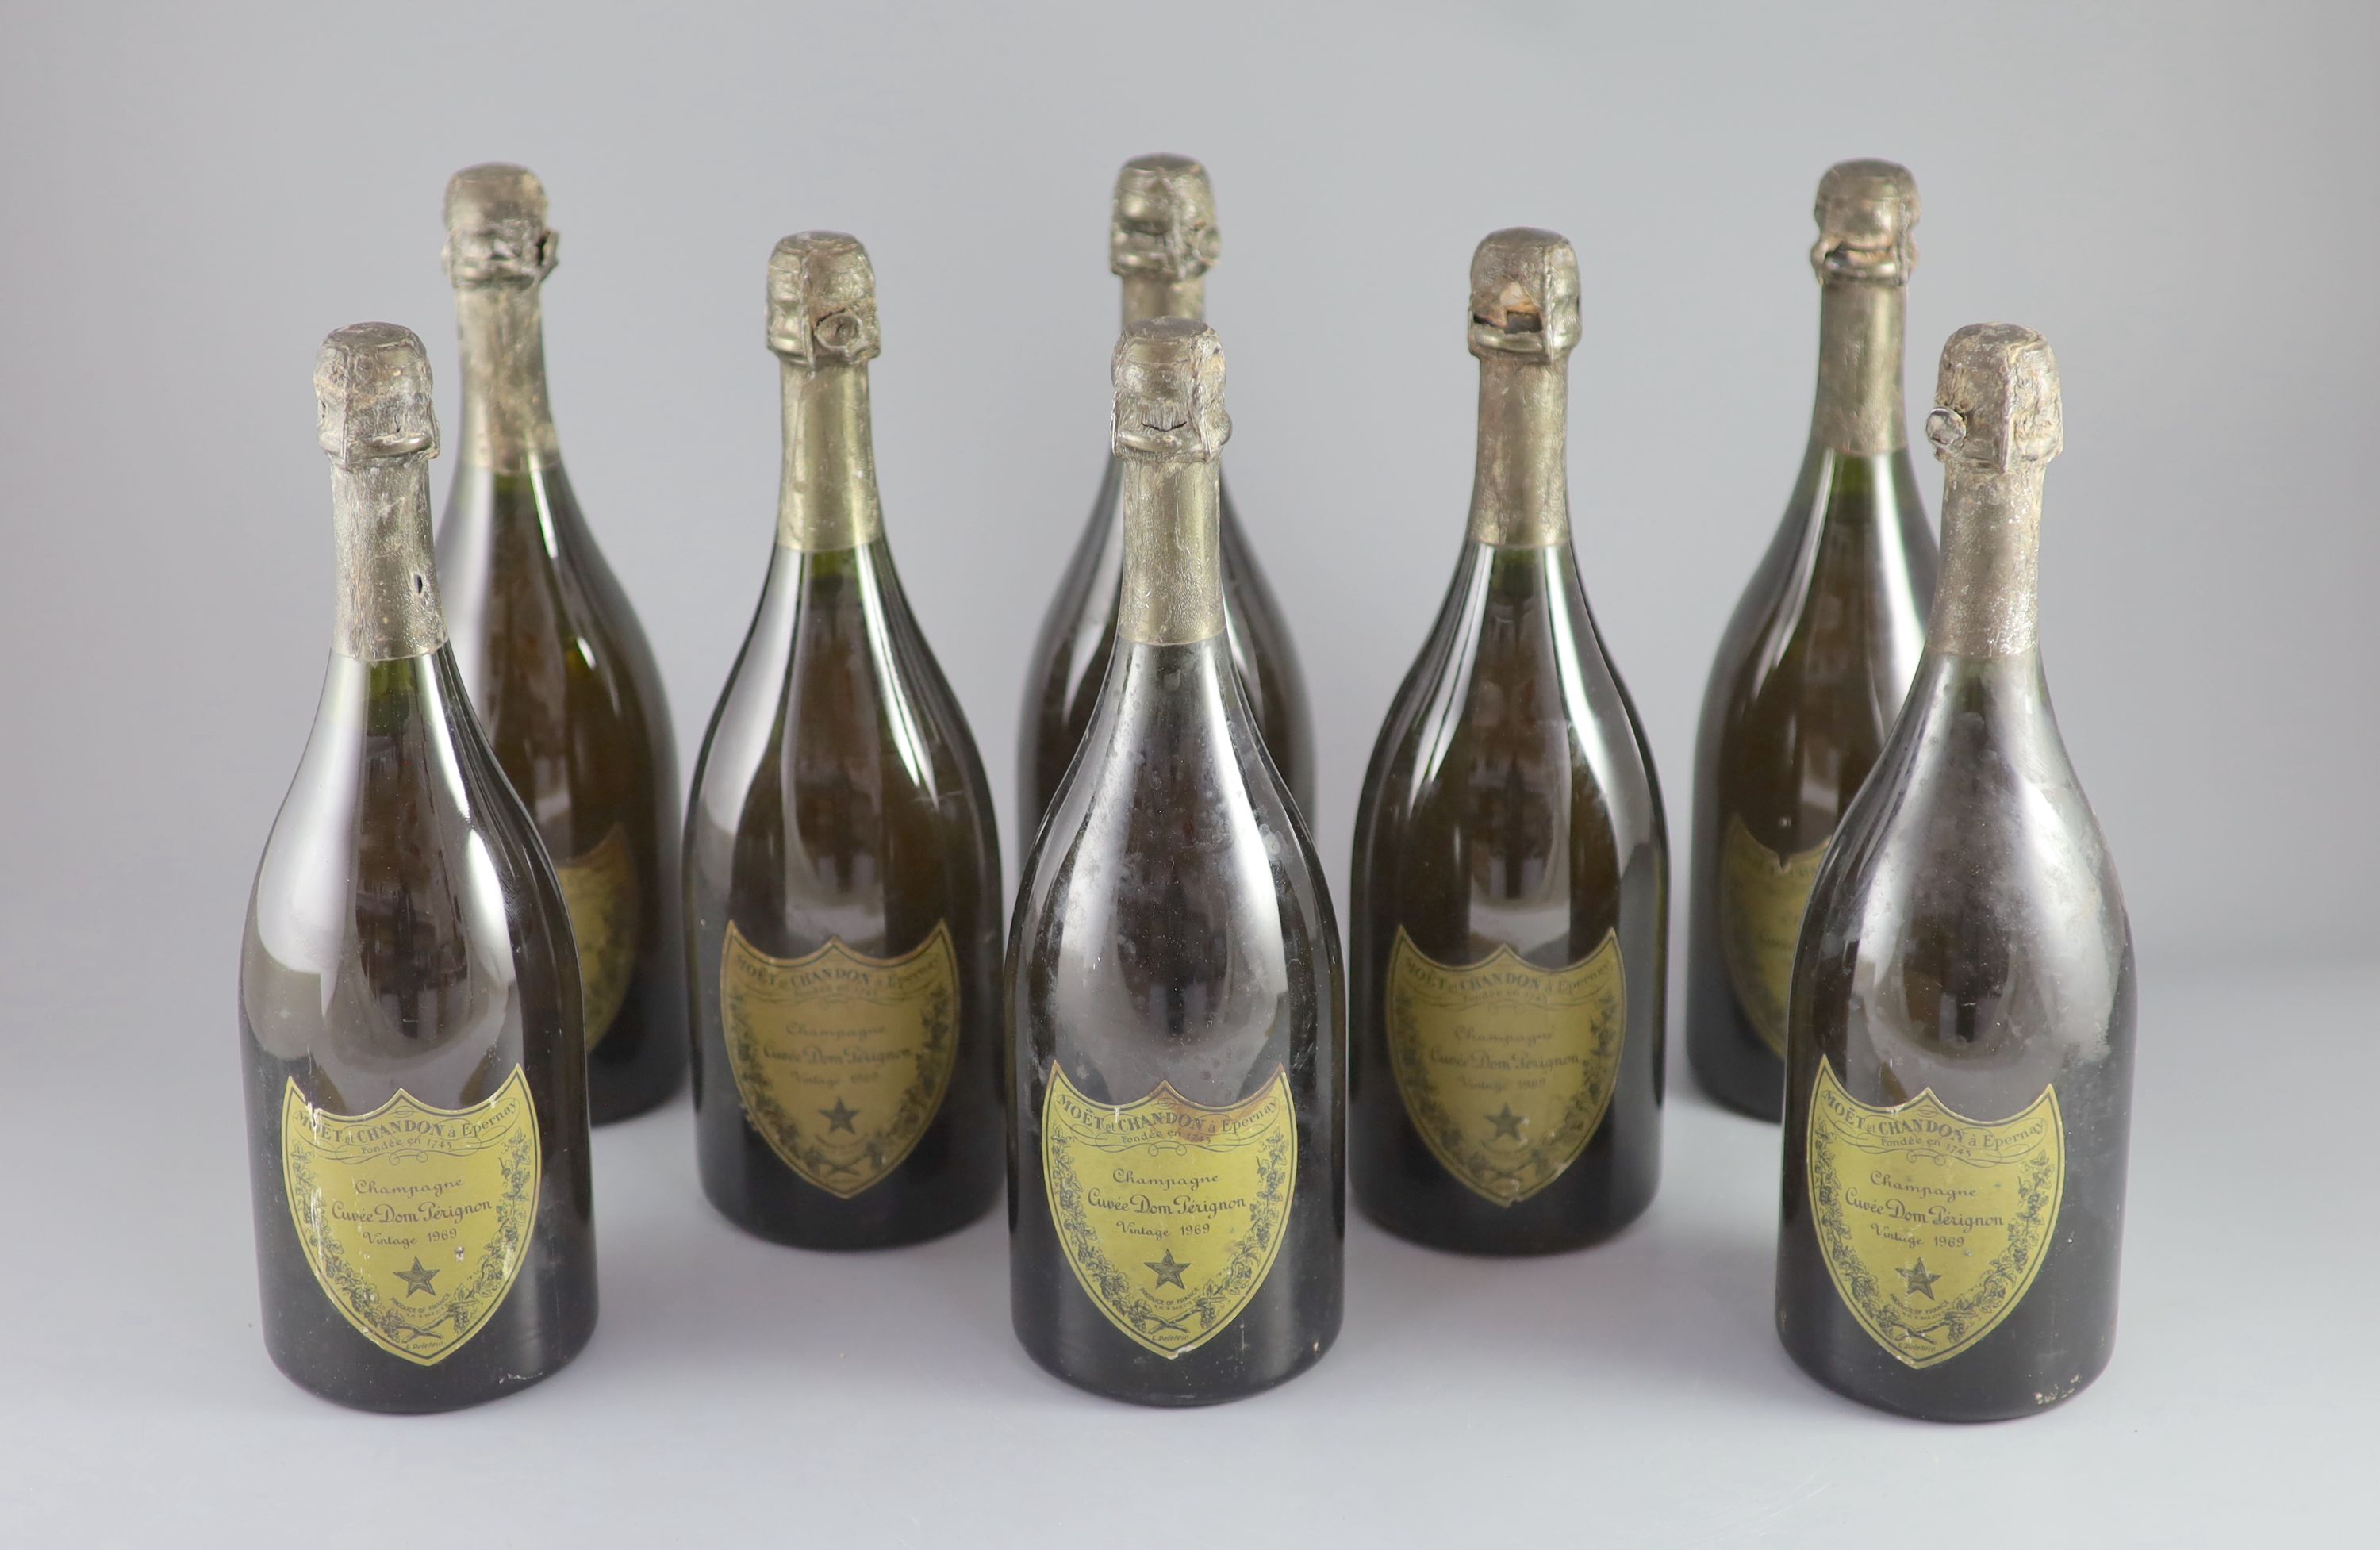 Eight bottles of Moet & Chandon Cuvee Dom Perignon Vintage 1969 Champagne.